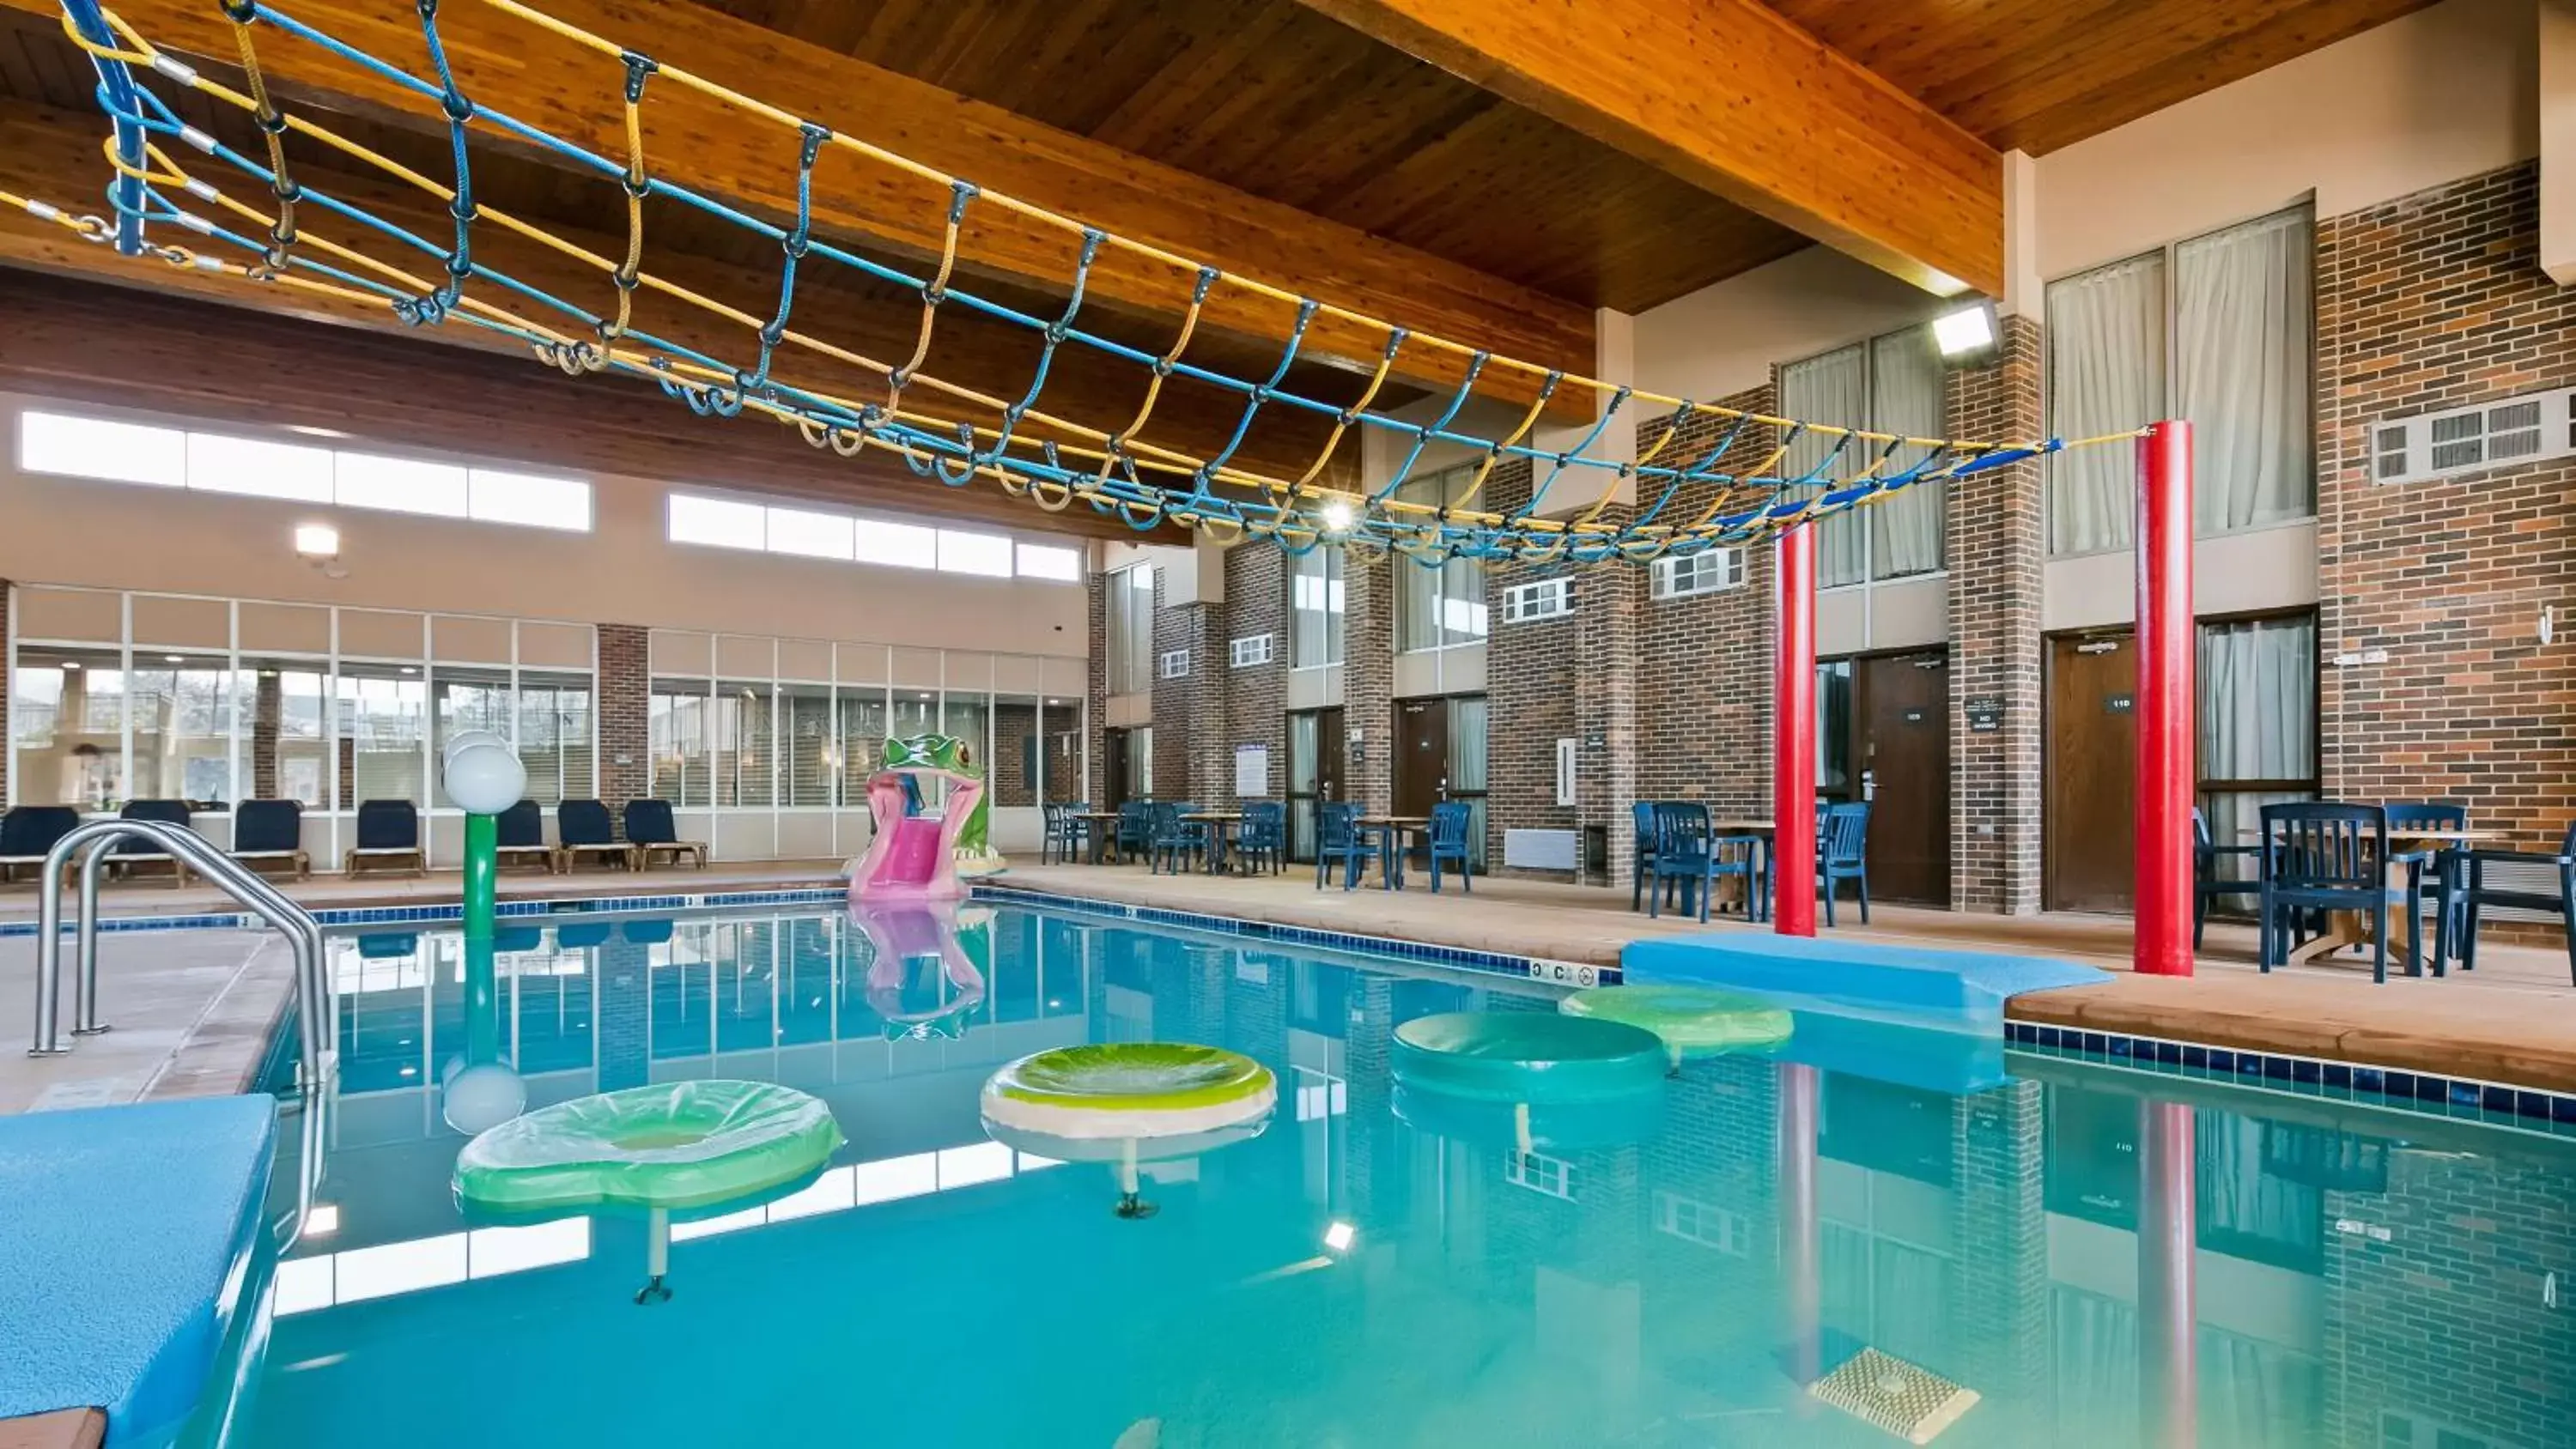 On site, Swimming Pool in Best Western Ramkota Hotel Aberdeen